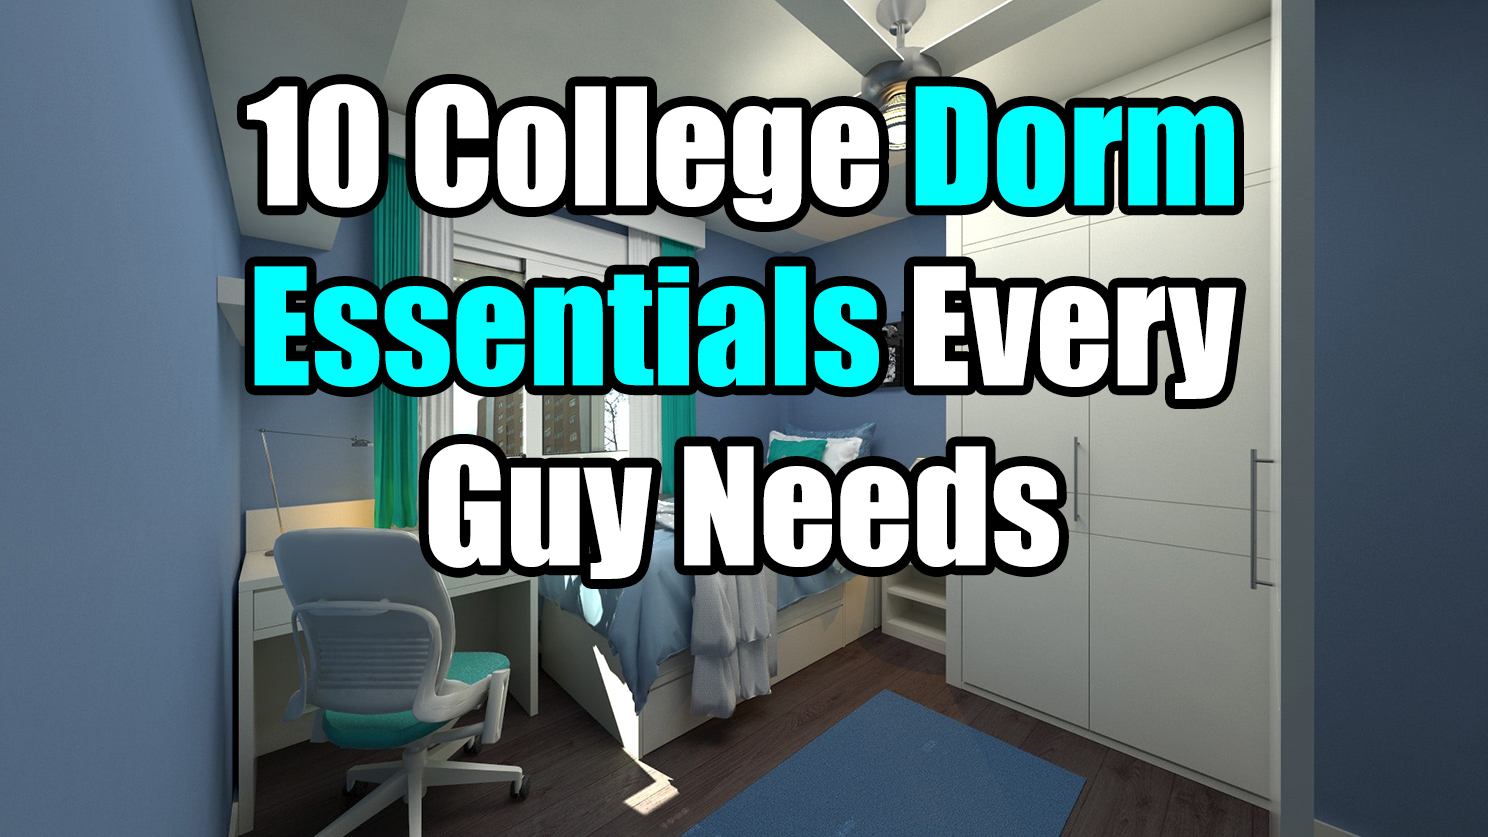 College dorm essentials for guys